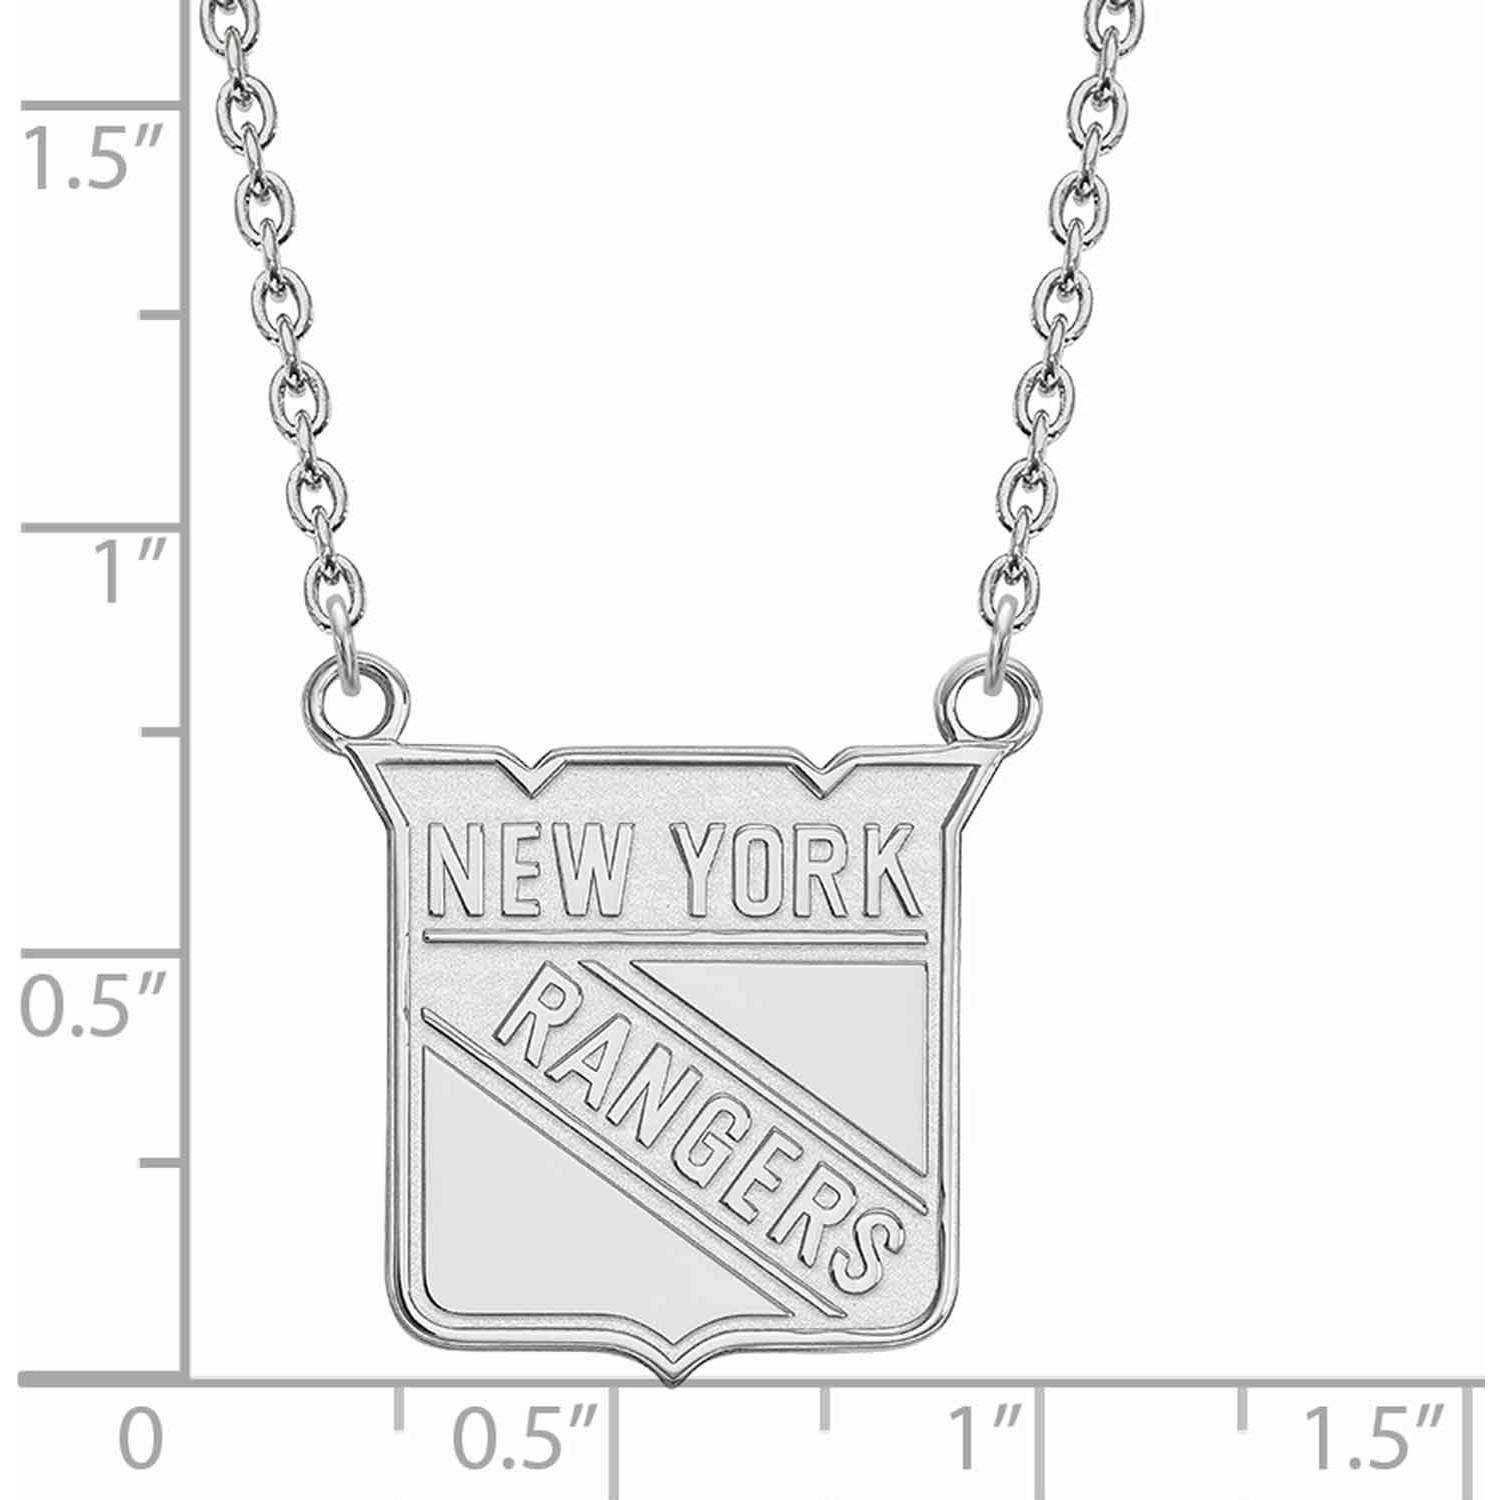 LogoArt 14 Karat White Gold NHL New York Rangers Large Pendant with Necklace - image 2 of 5